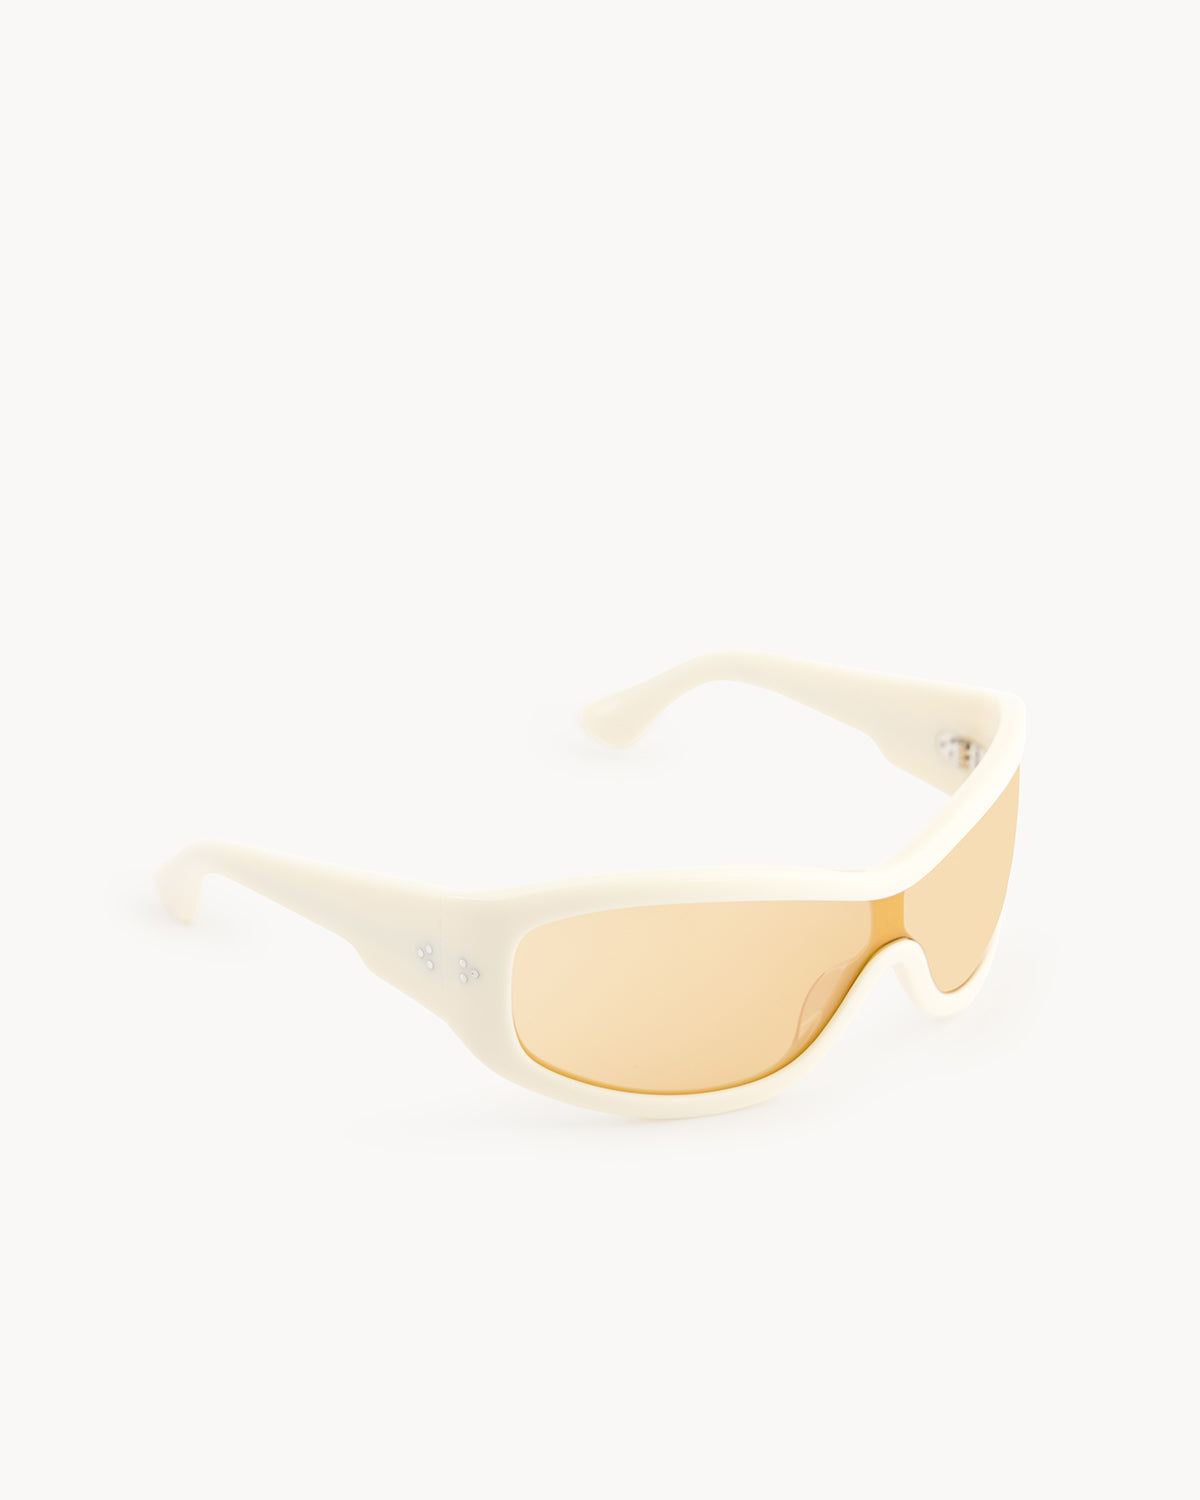 Port Tanger Nunny Sunglasses in Sandarac Acetate and Amber Lenses 2